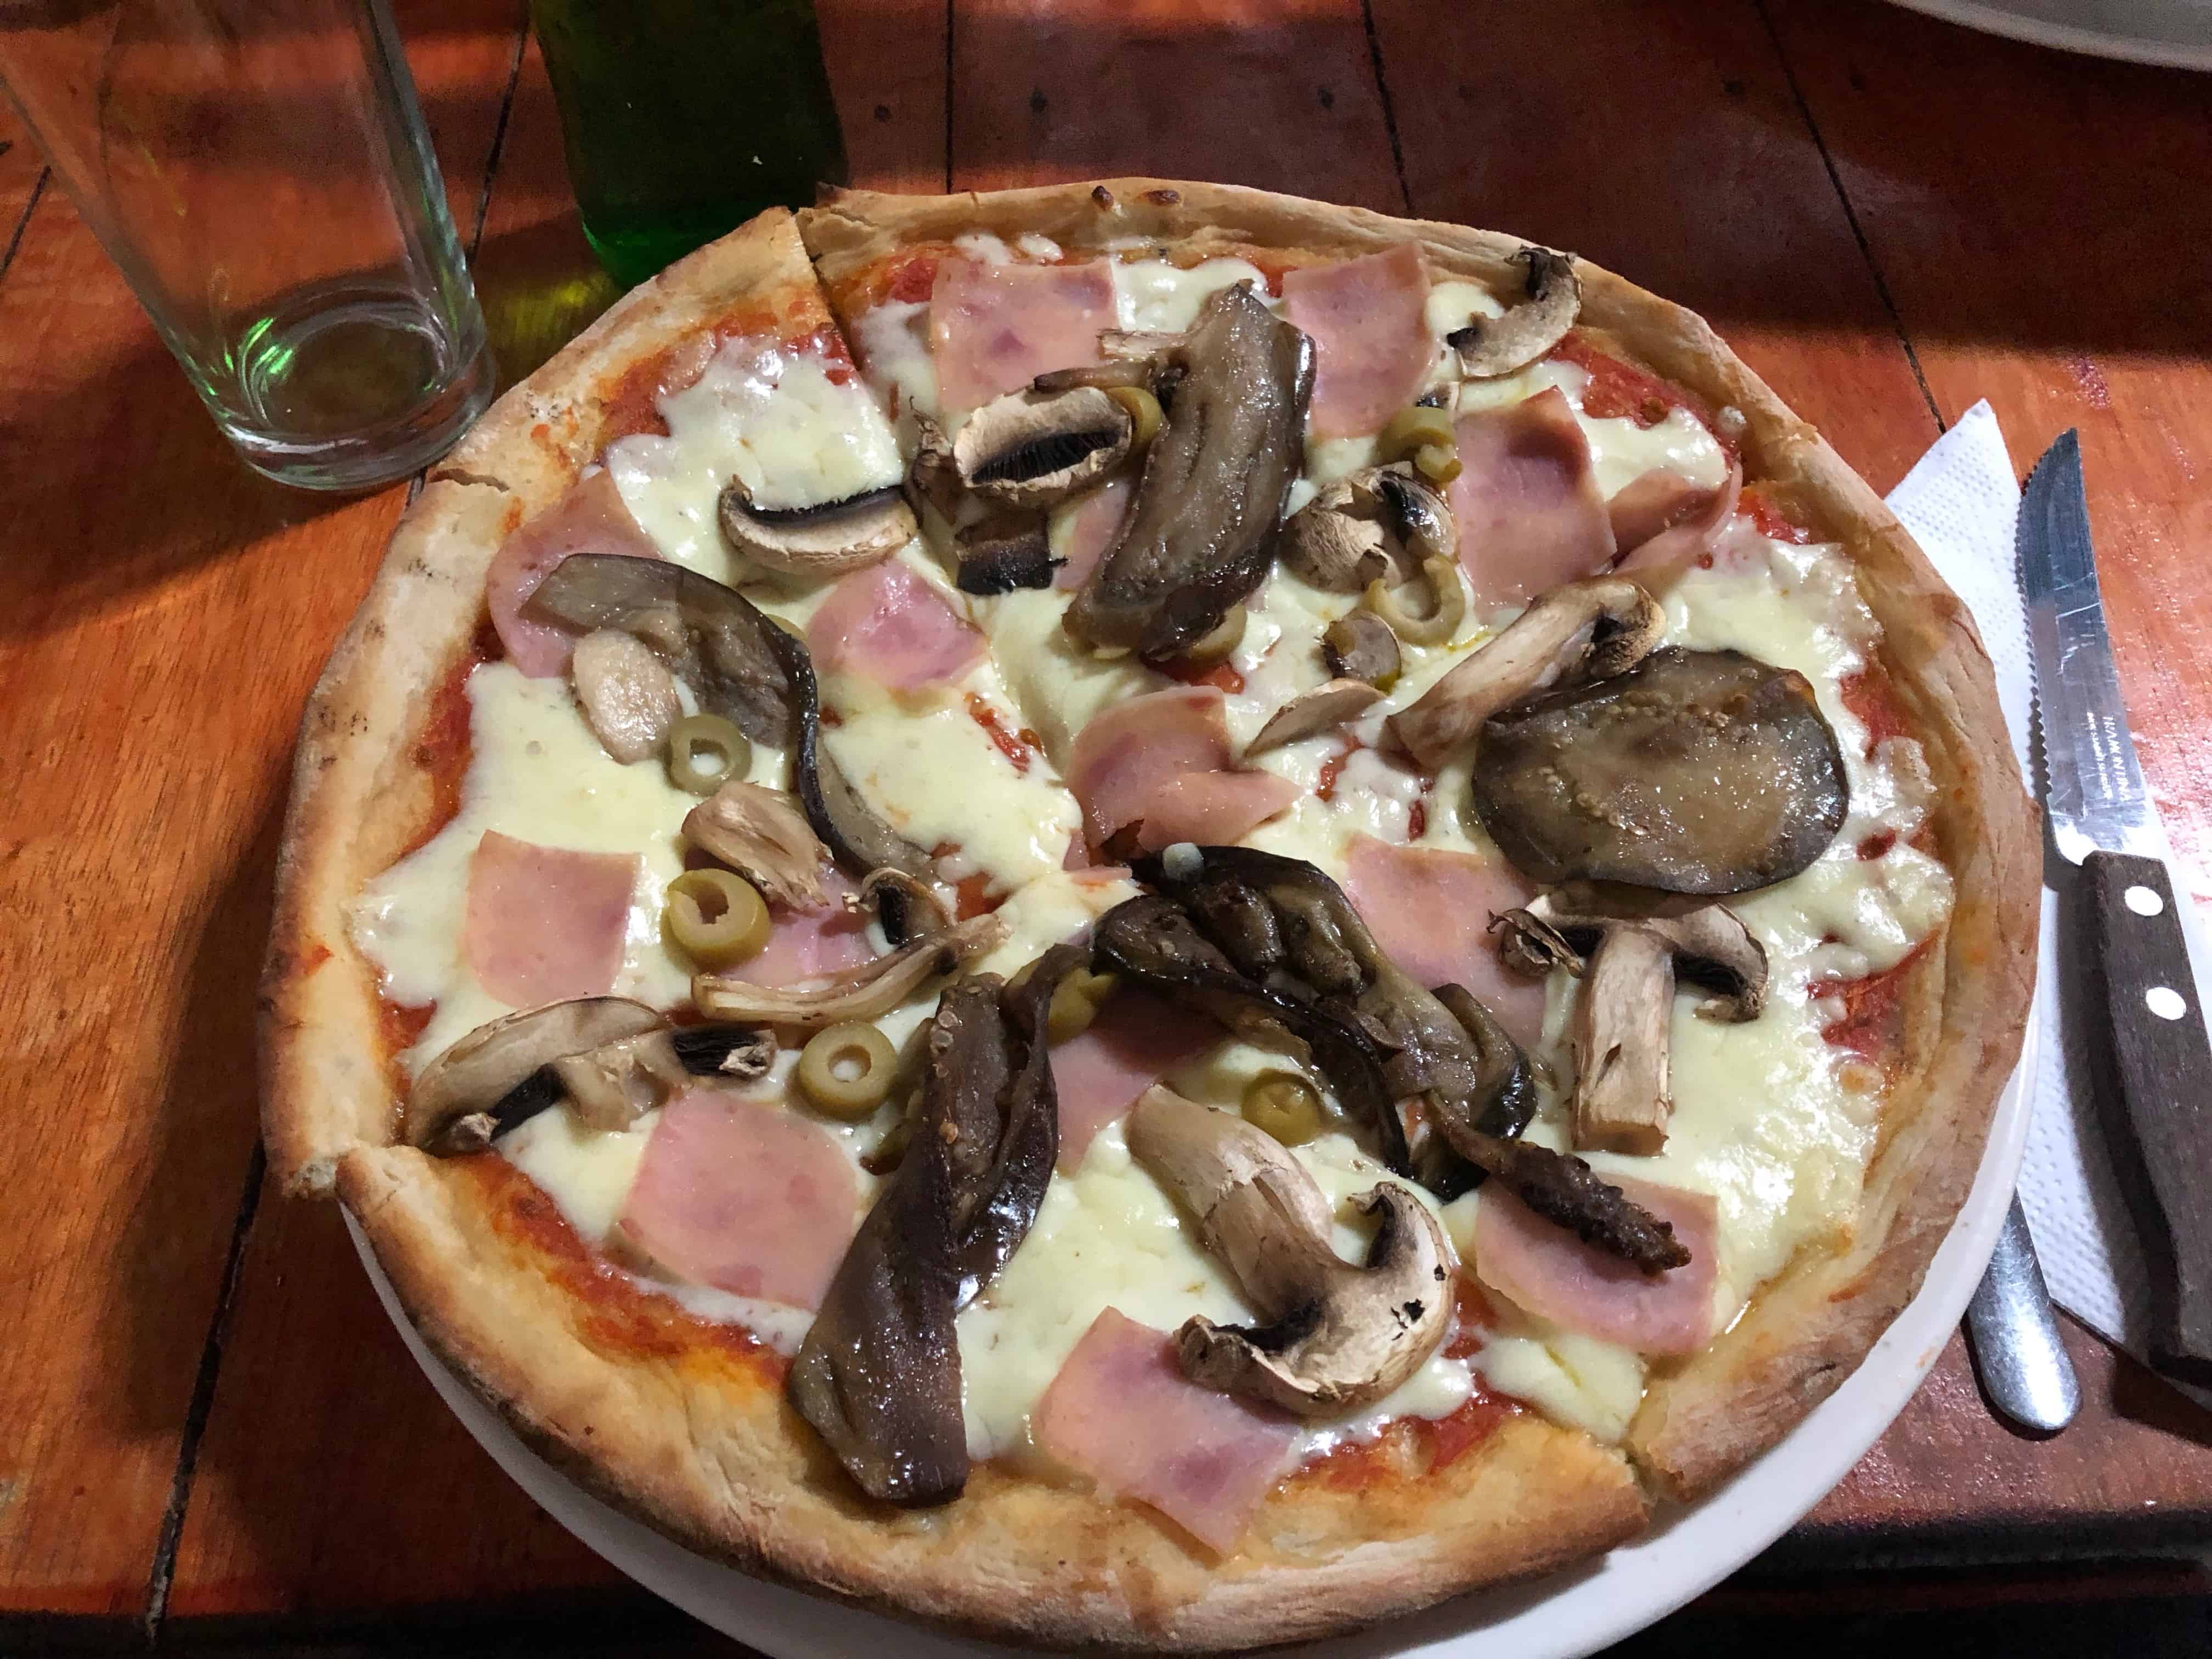 Cuatro estaciones pizza at Piccola Italia